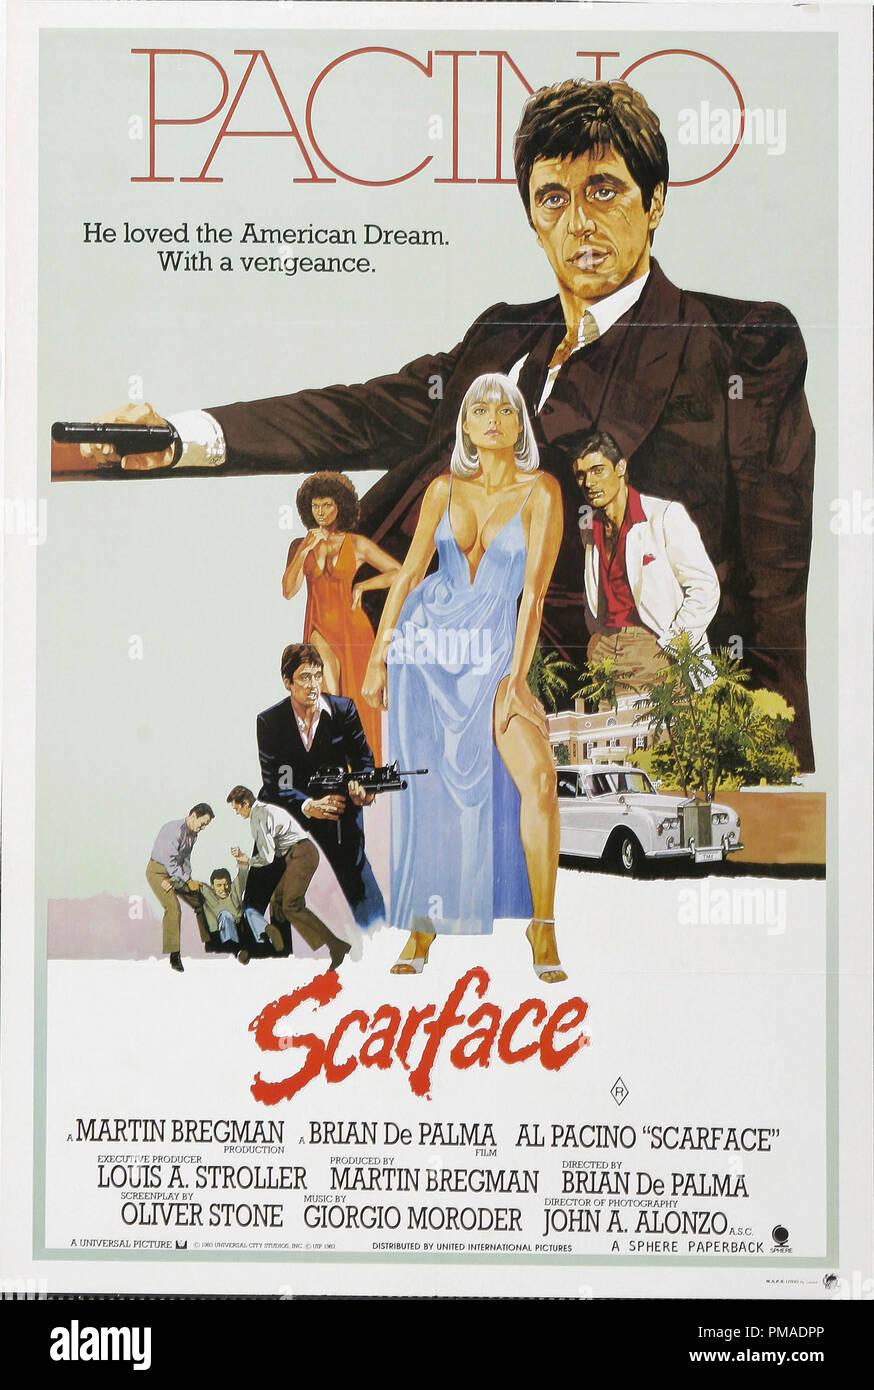 'Scarface' - US Poster 1983 Universal Pictures  Al Pacino, Michelle Pfeiffer, Steven Bauer, Mary Elizabeth Mastrantonio  File Reference # 32509 323THA Stock Photo